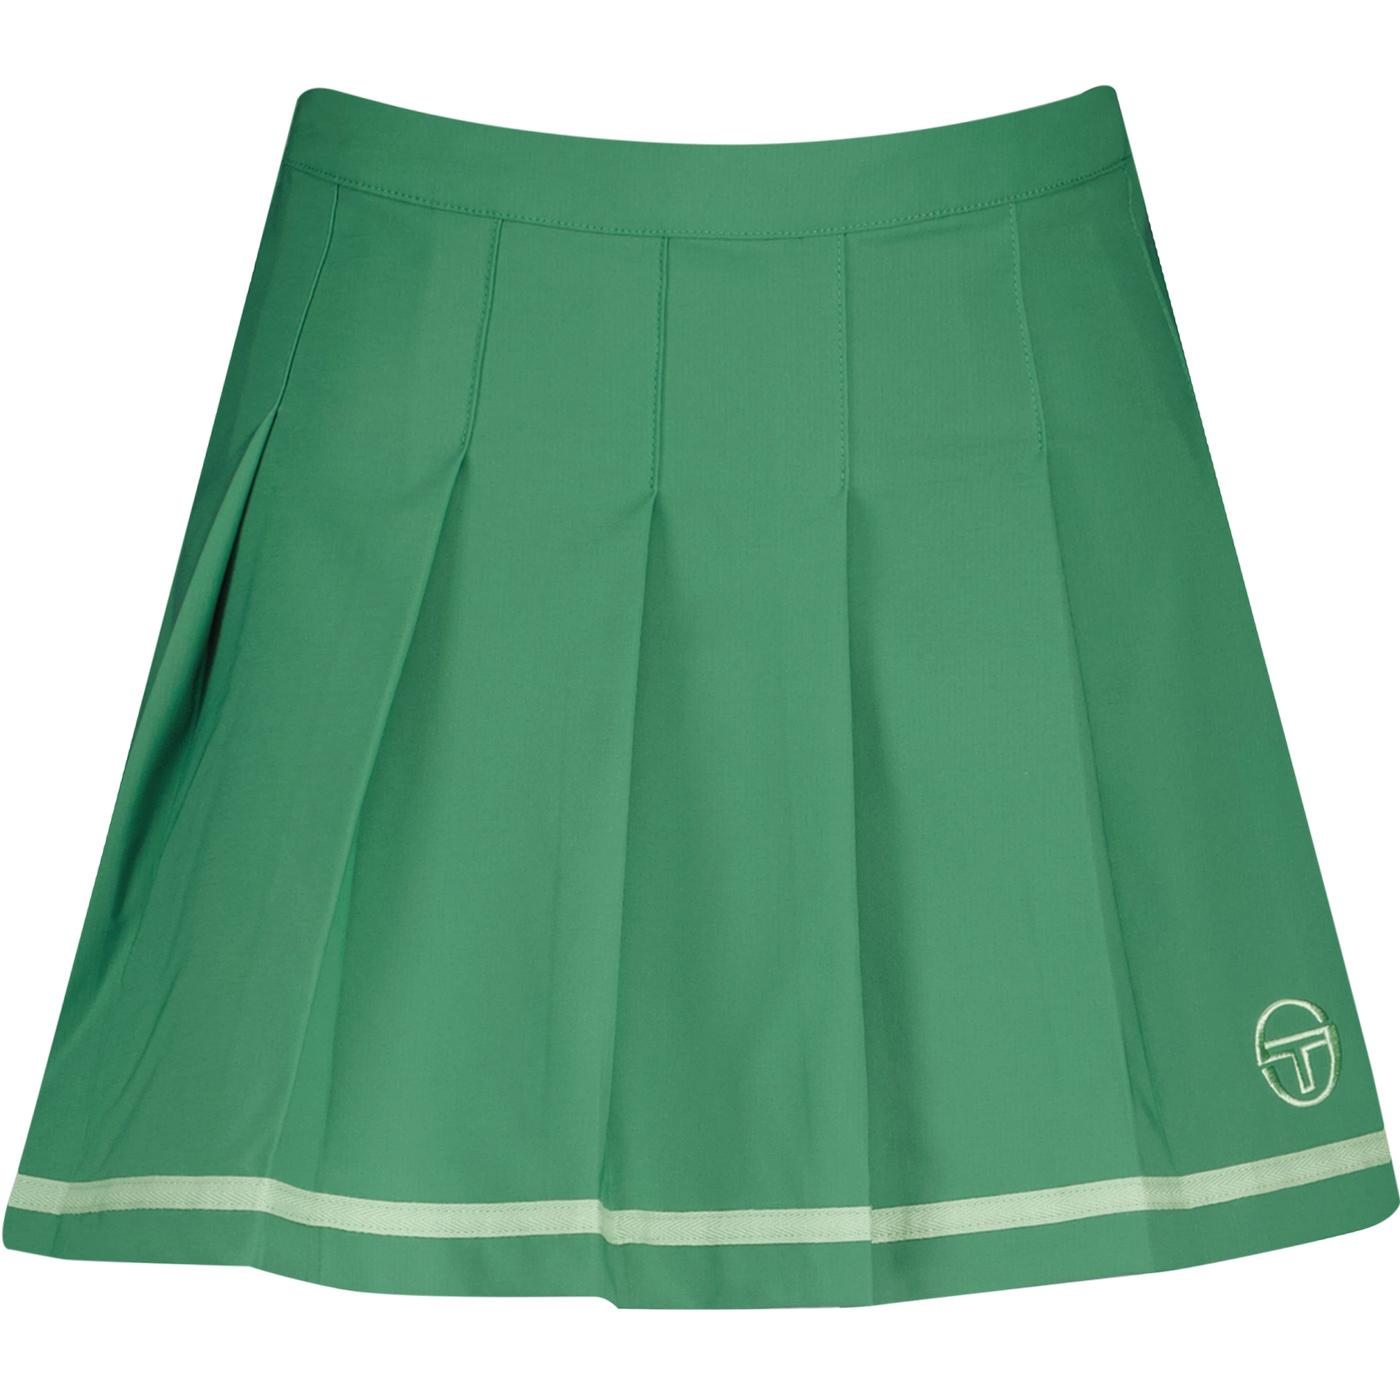 Kalkman Sergio Tacchini Tennis Skirt Foliage Green